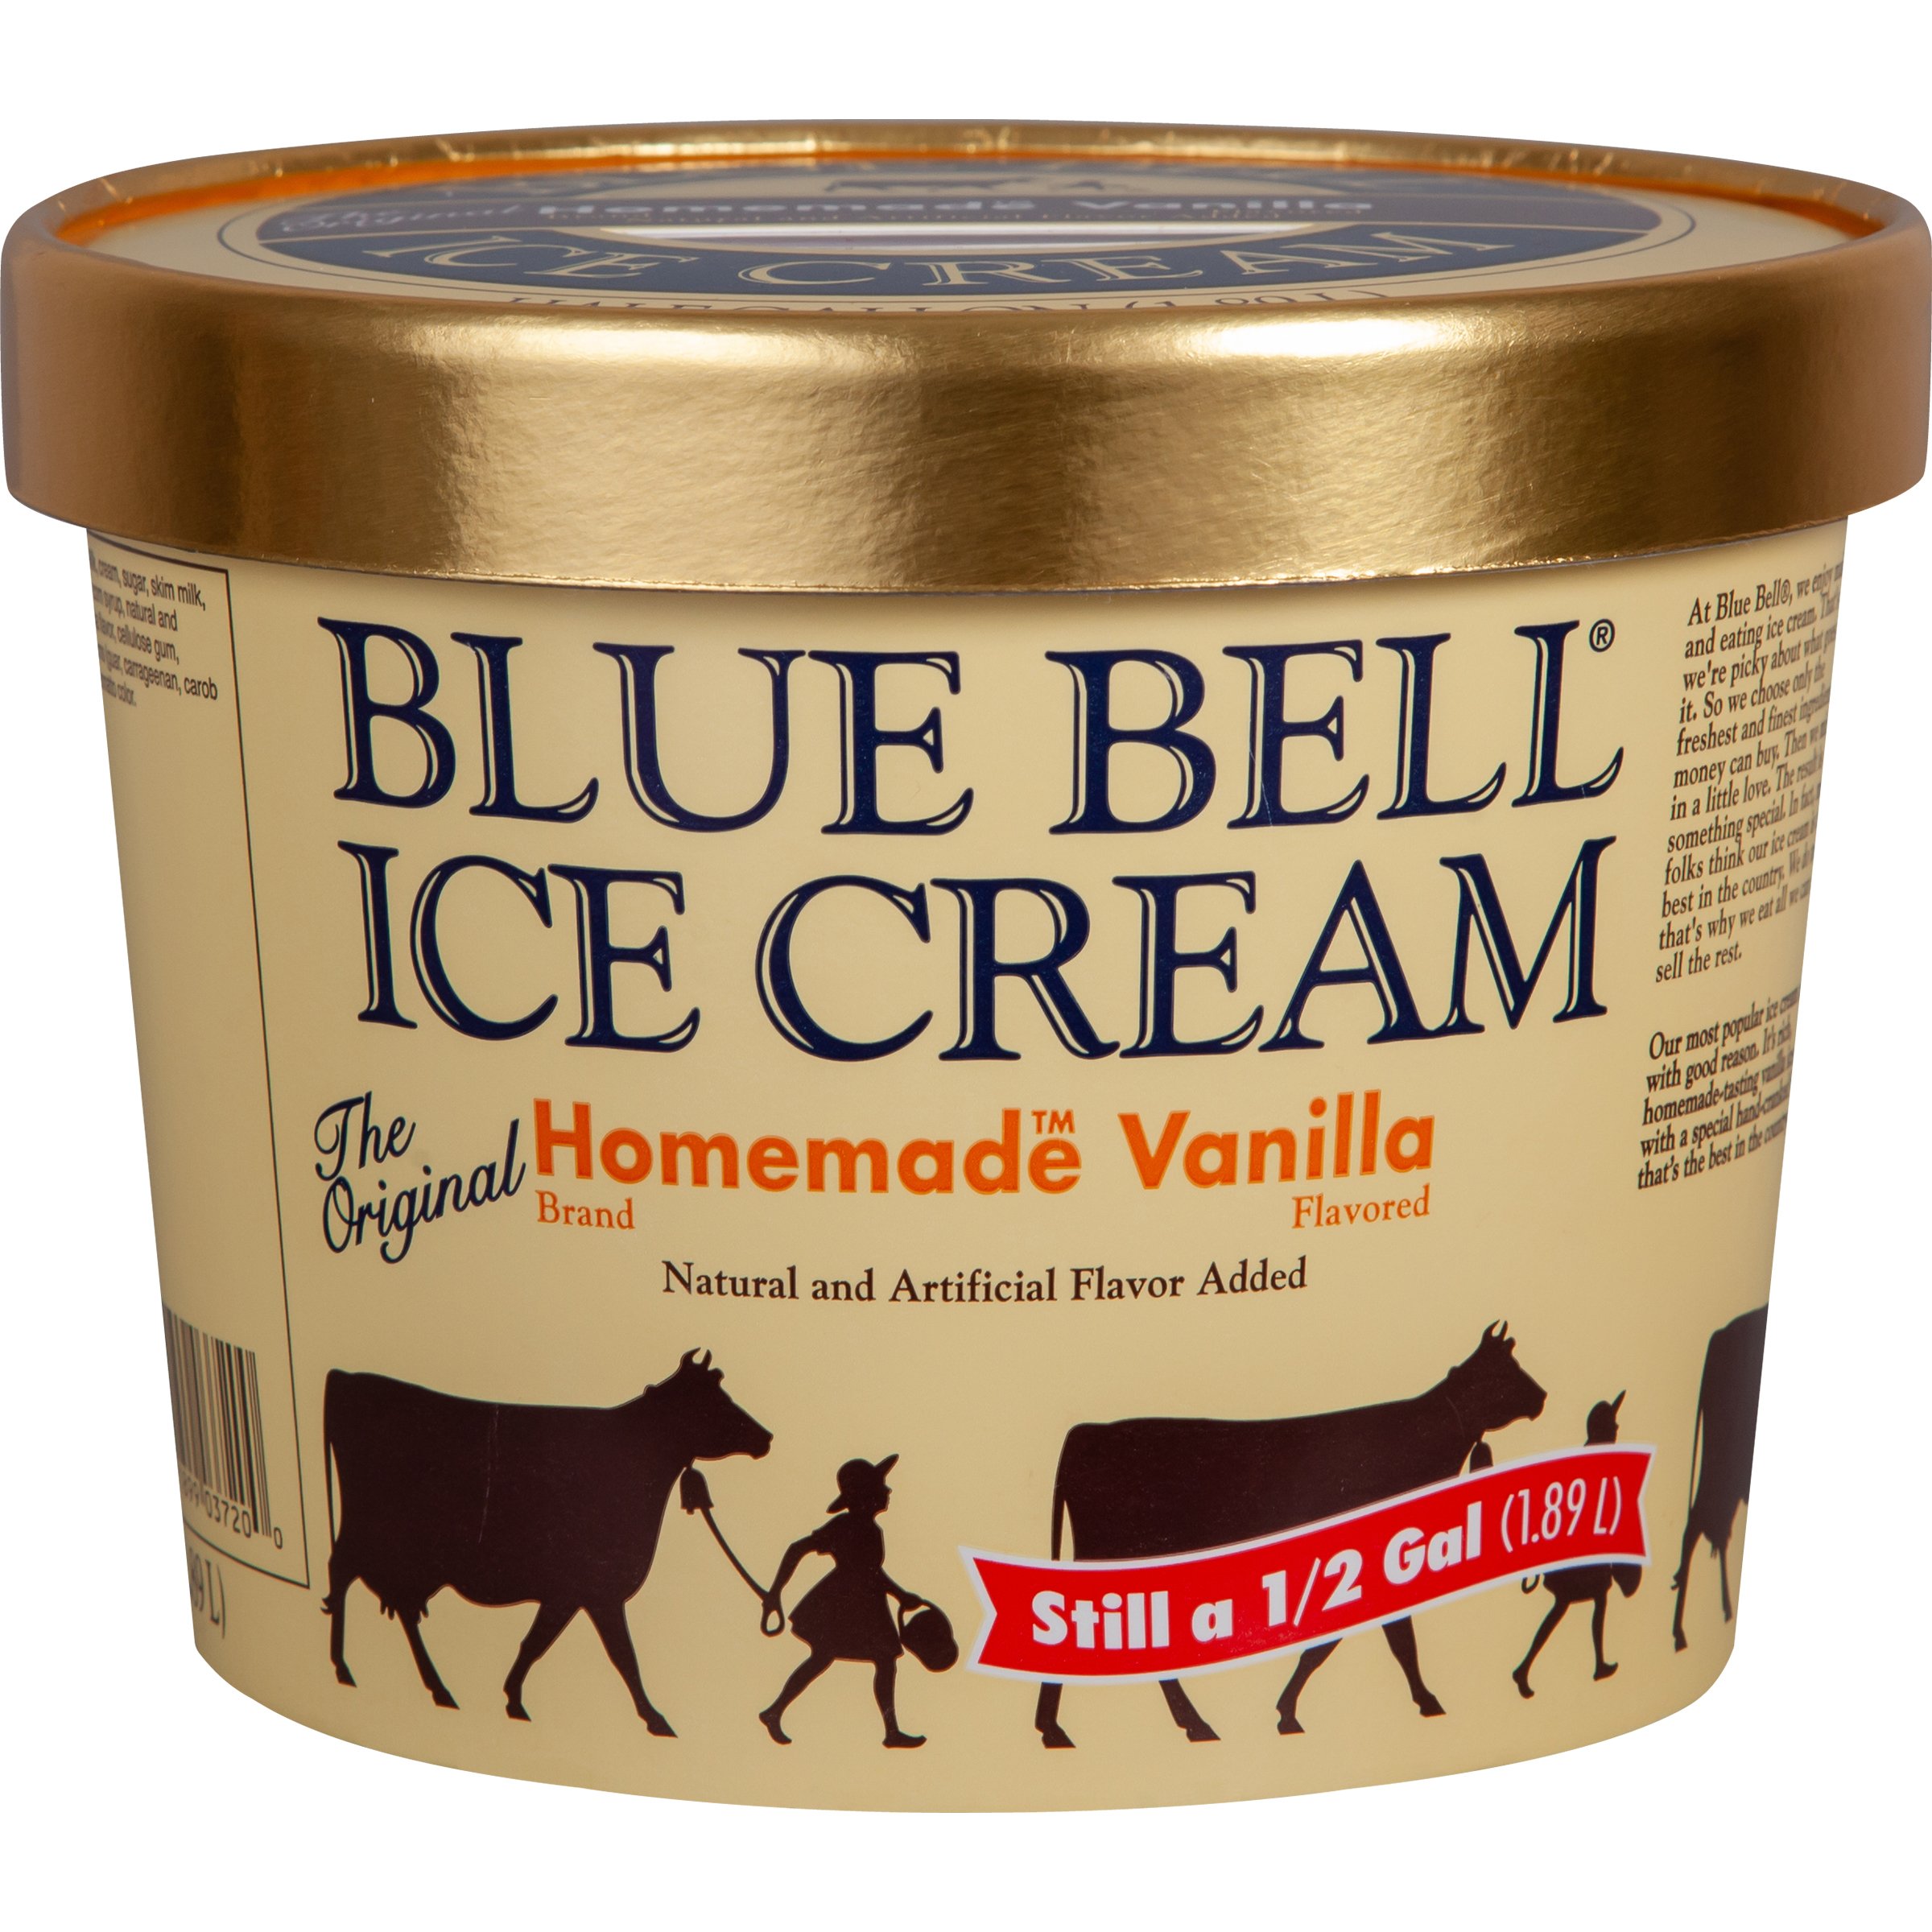 Blue Bell Homemade Vanilla Ice Cream - Shop Ice Cream & Treats at H-E-B